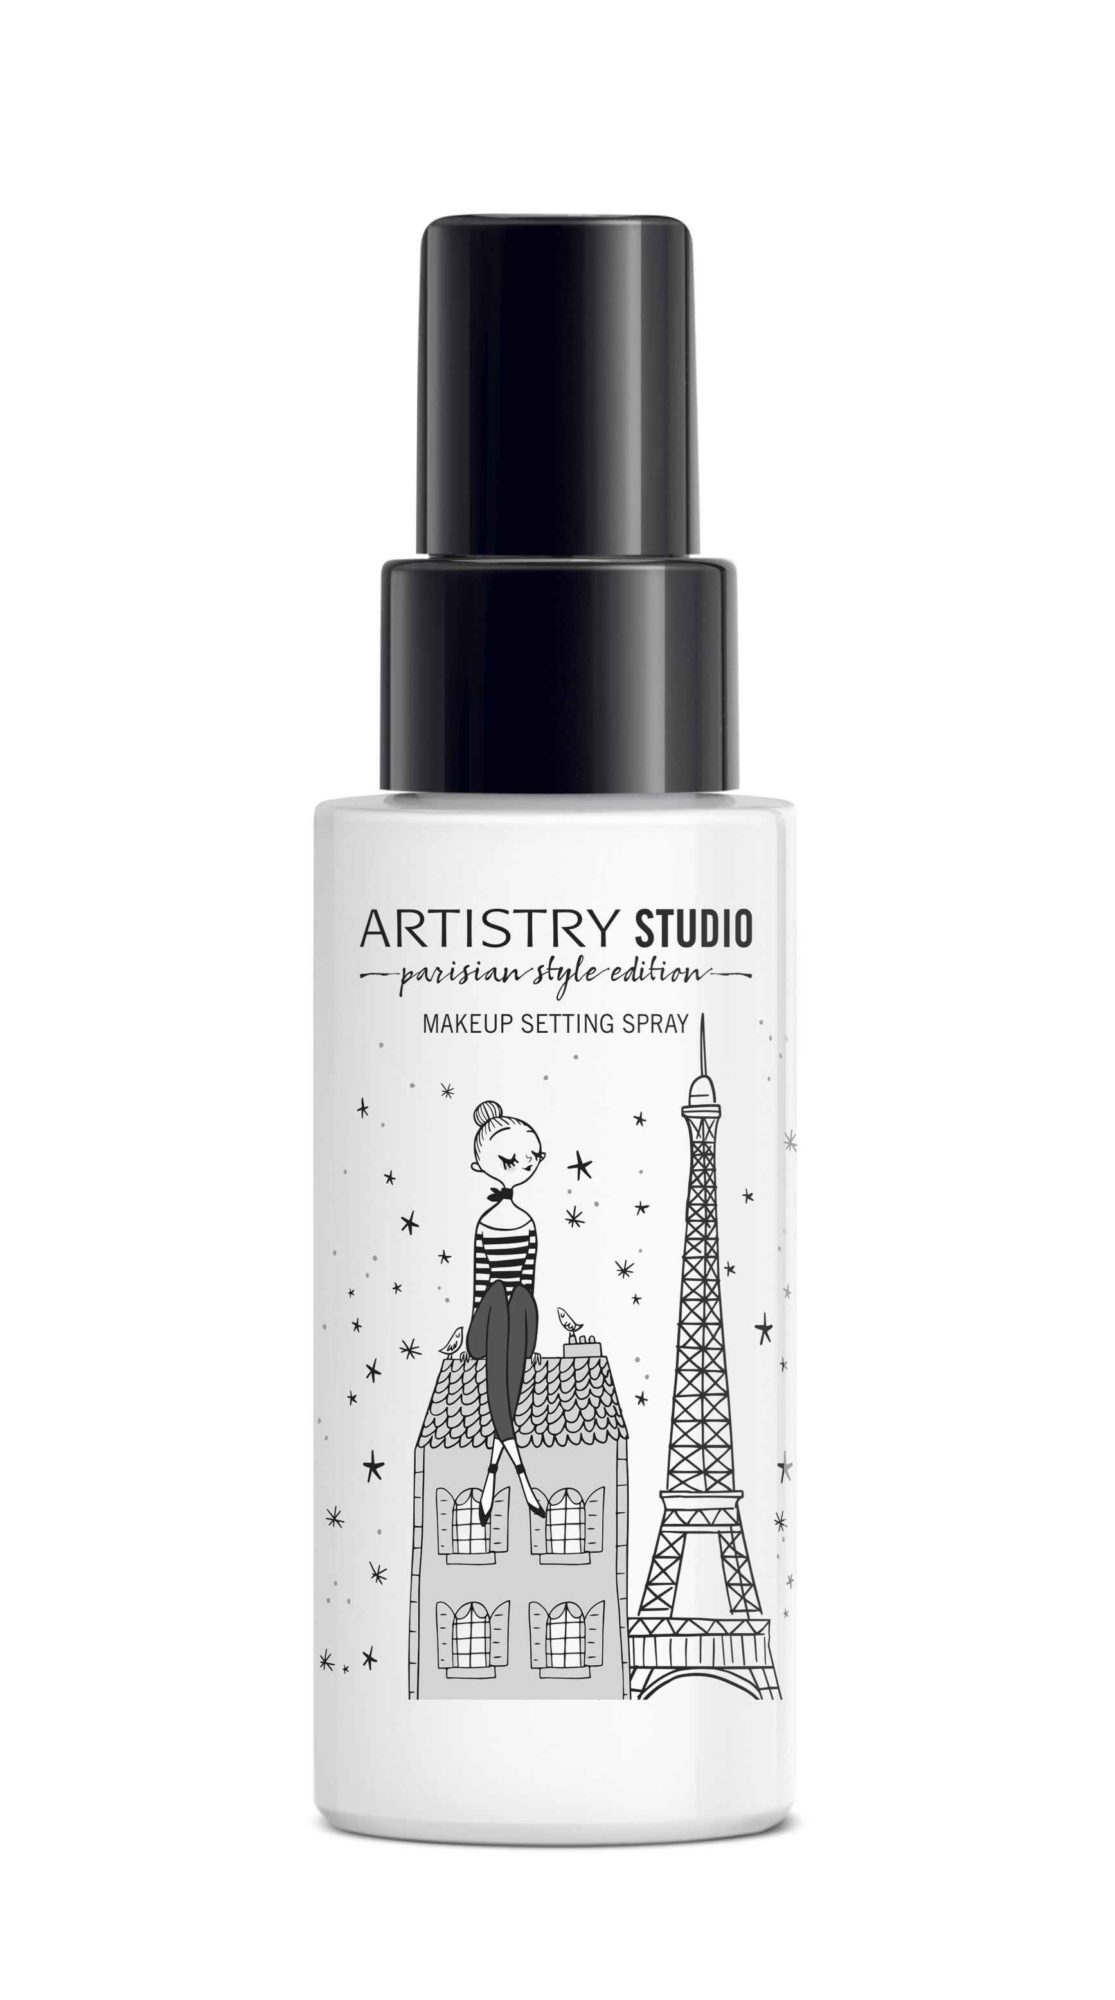 Artistry Studio Parisian Style: Makeup Setting Spray